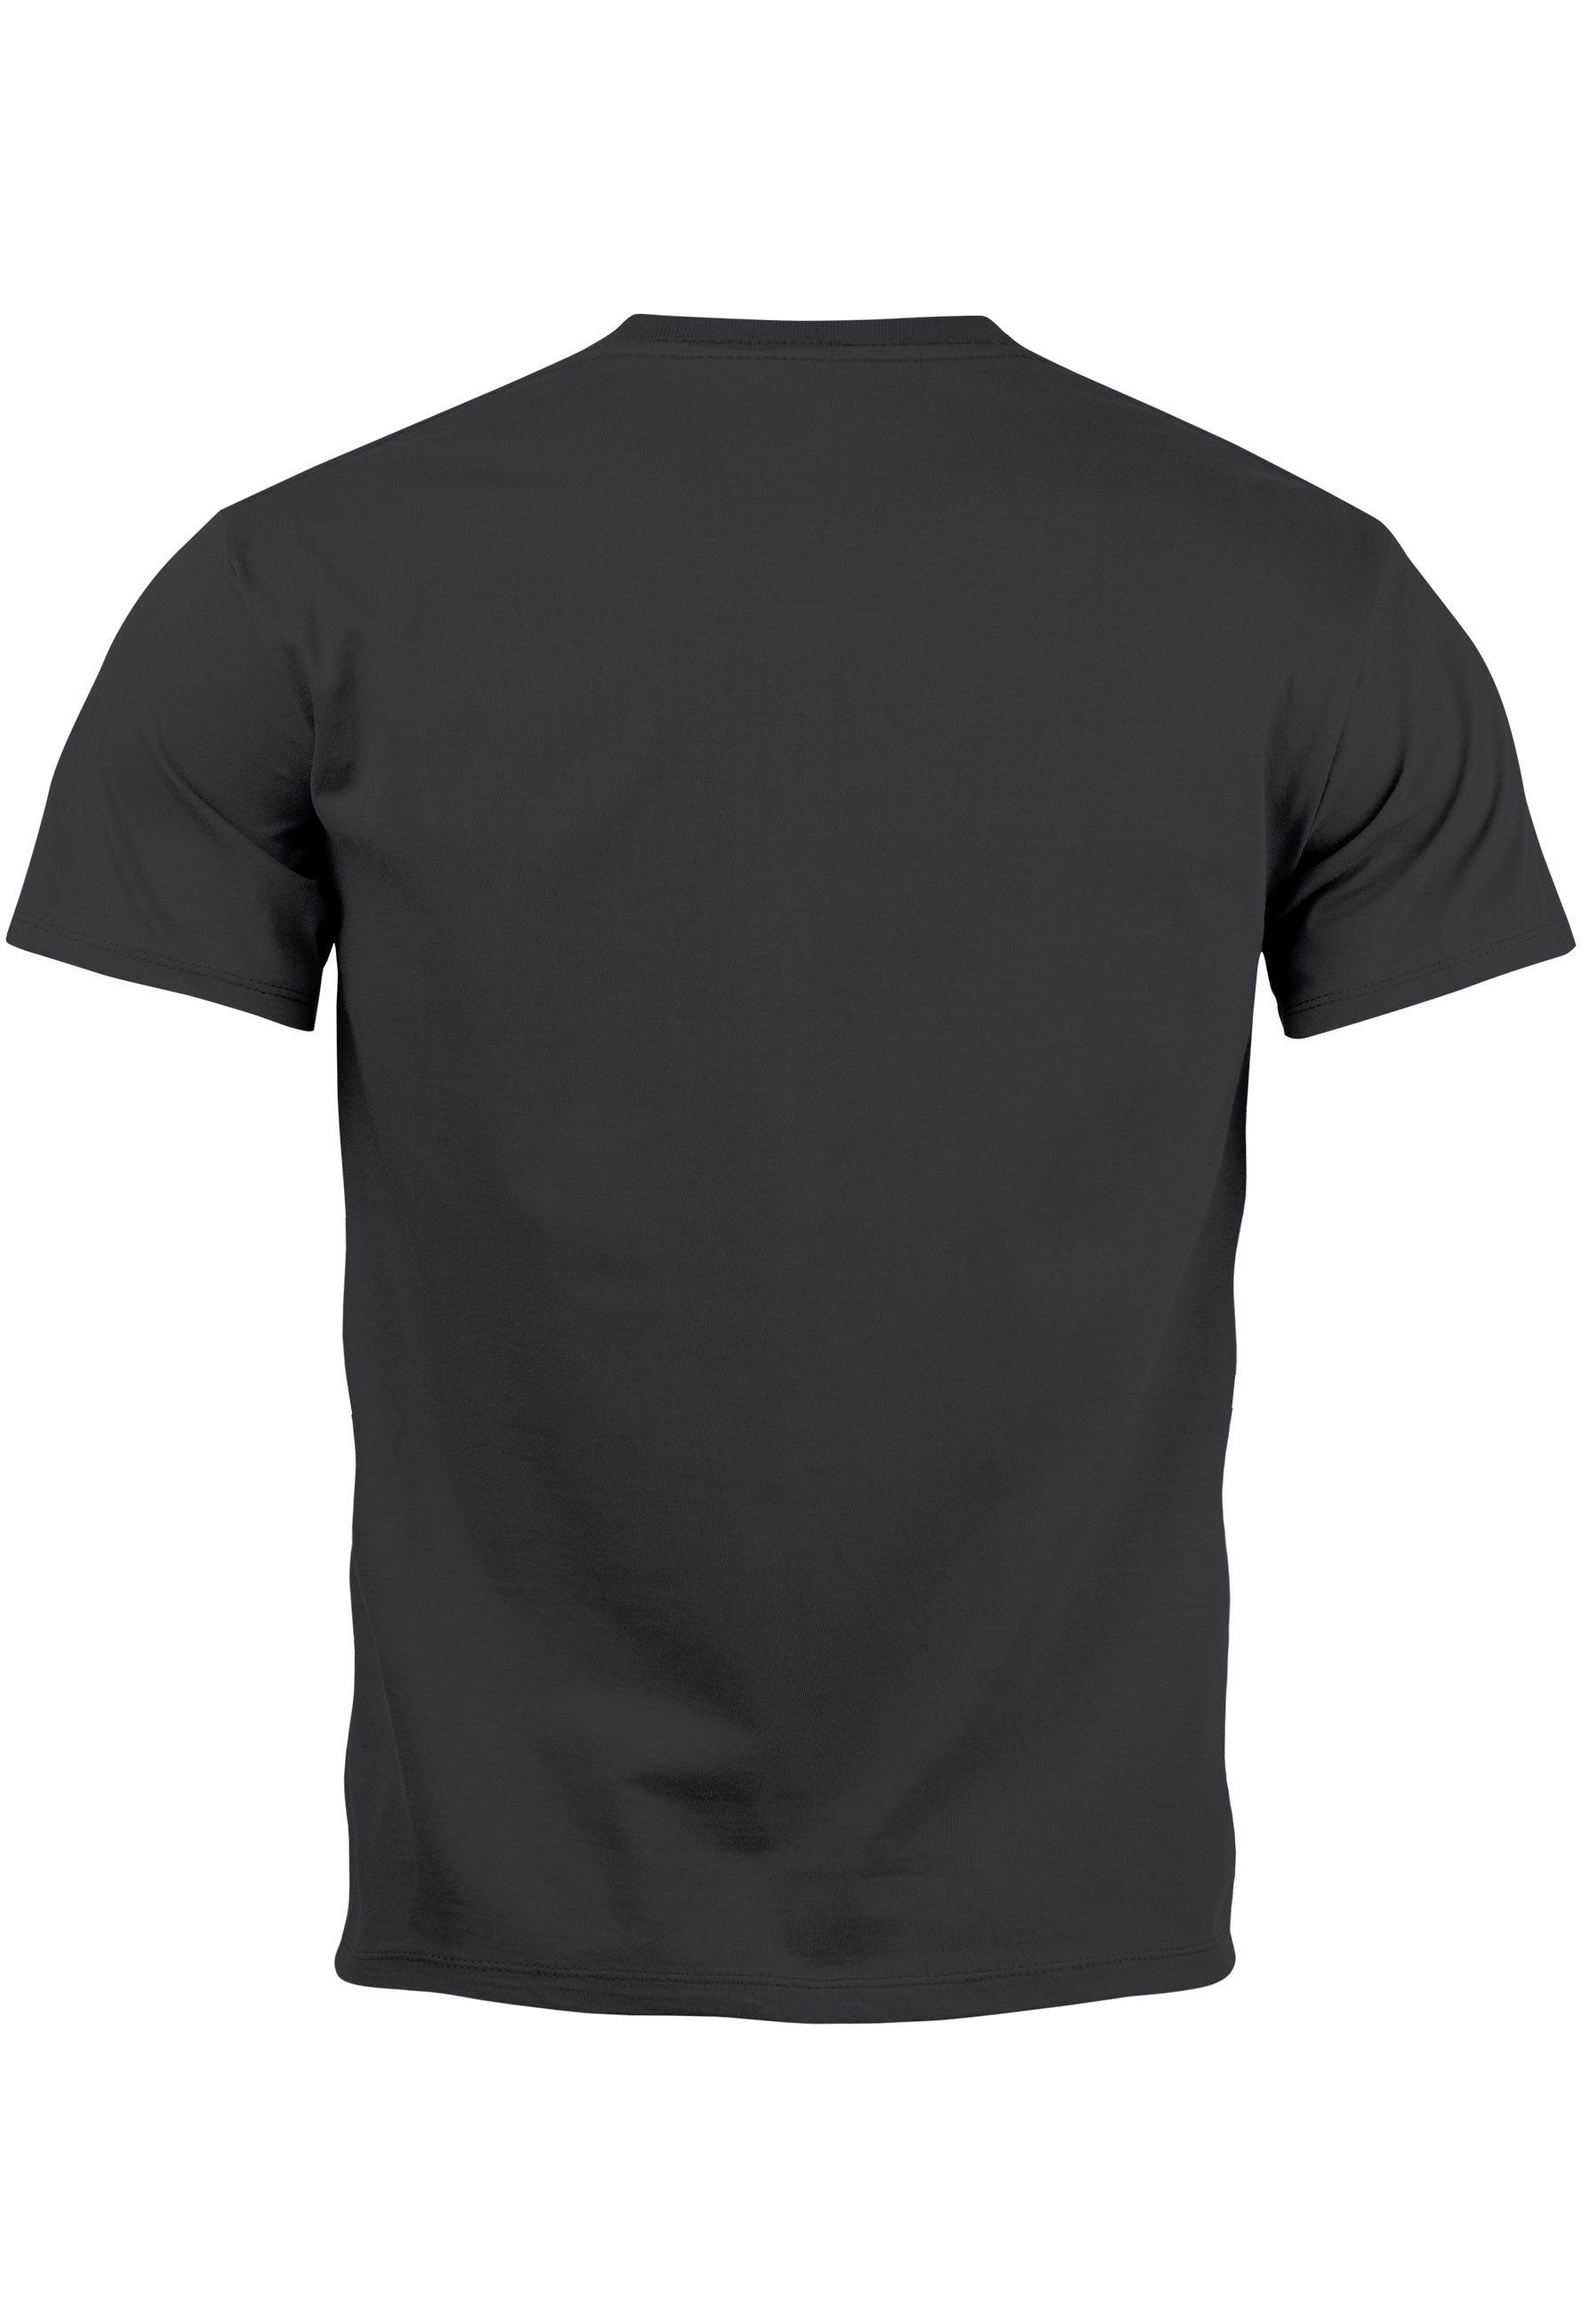 Herren Military Print-Shirt anthrazit mit Neverless Streetstyle Fas Techwear Japanese Trend Print Motive T-Shirt